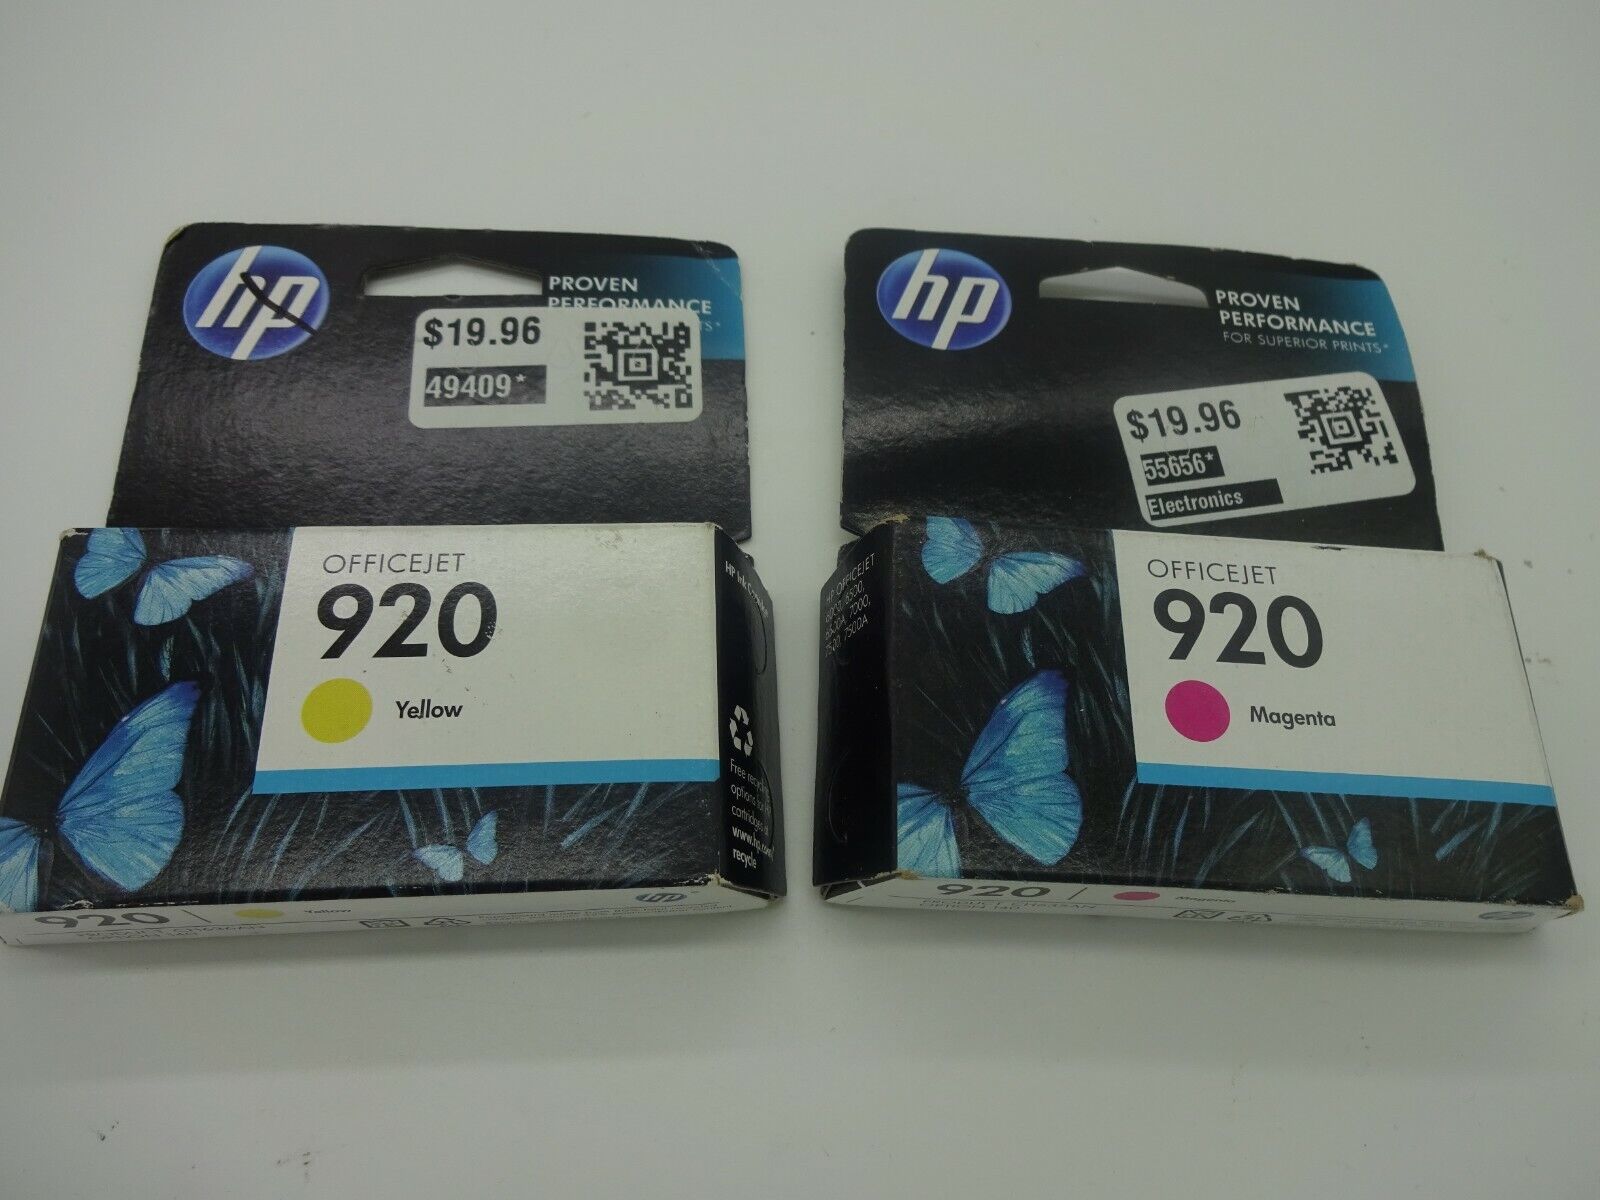 Genuine HP 920 Yellow & Magenta Ink Cartridge Exp 10-2016 & 3-2016 New Sealed